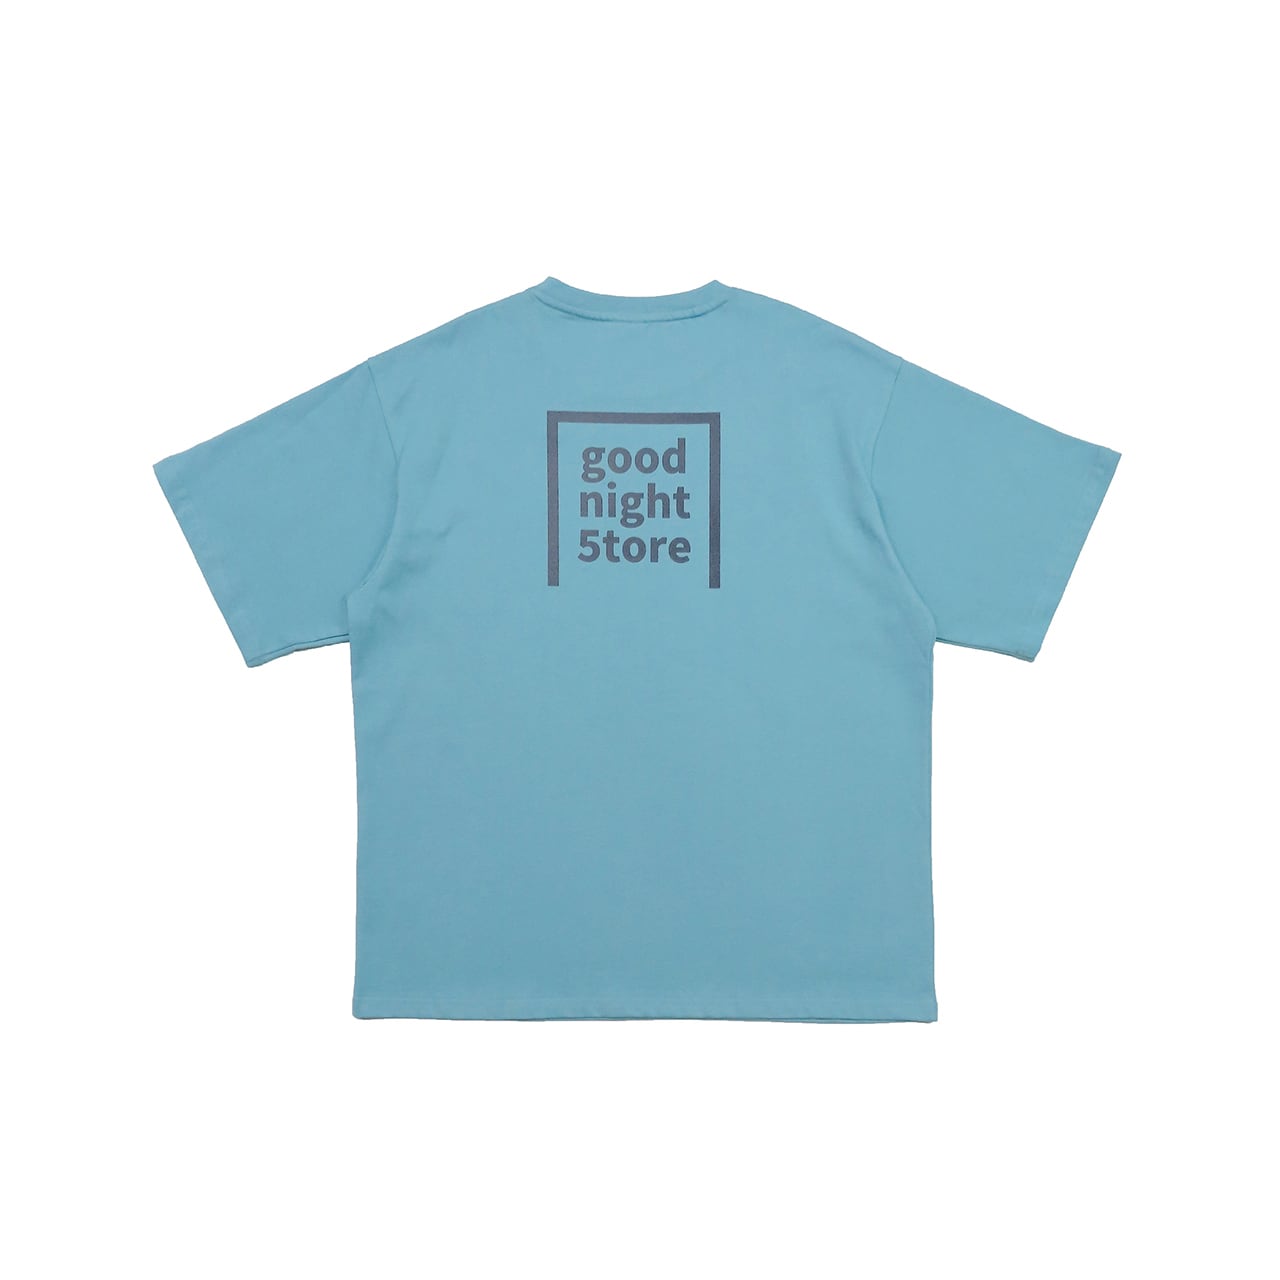 goodnight5tore Tシャツ darkbluegoodnight5tore - Tシャツ(半袖/袖なし)